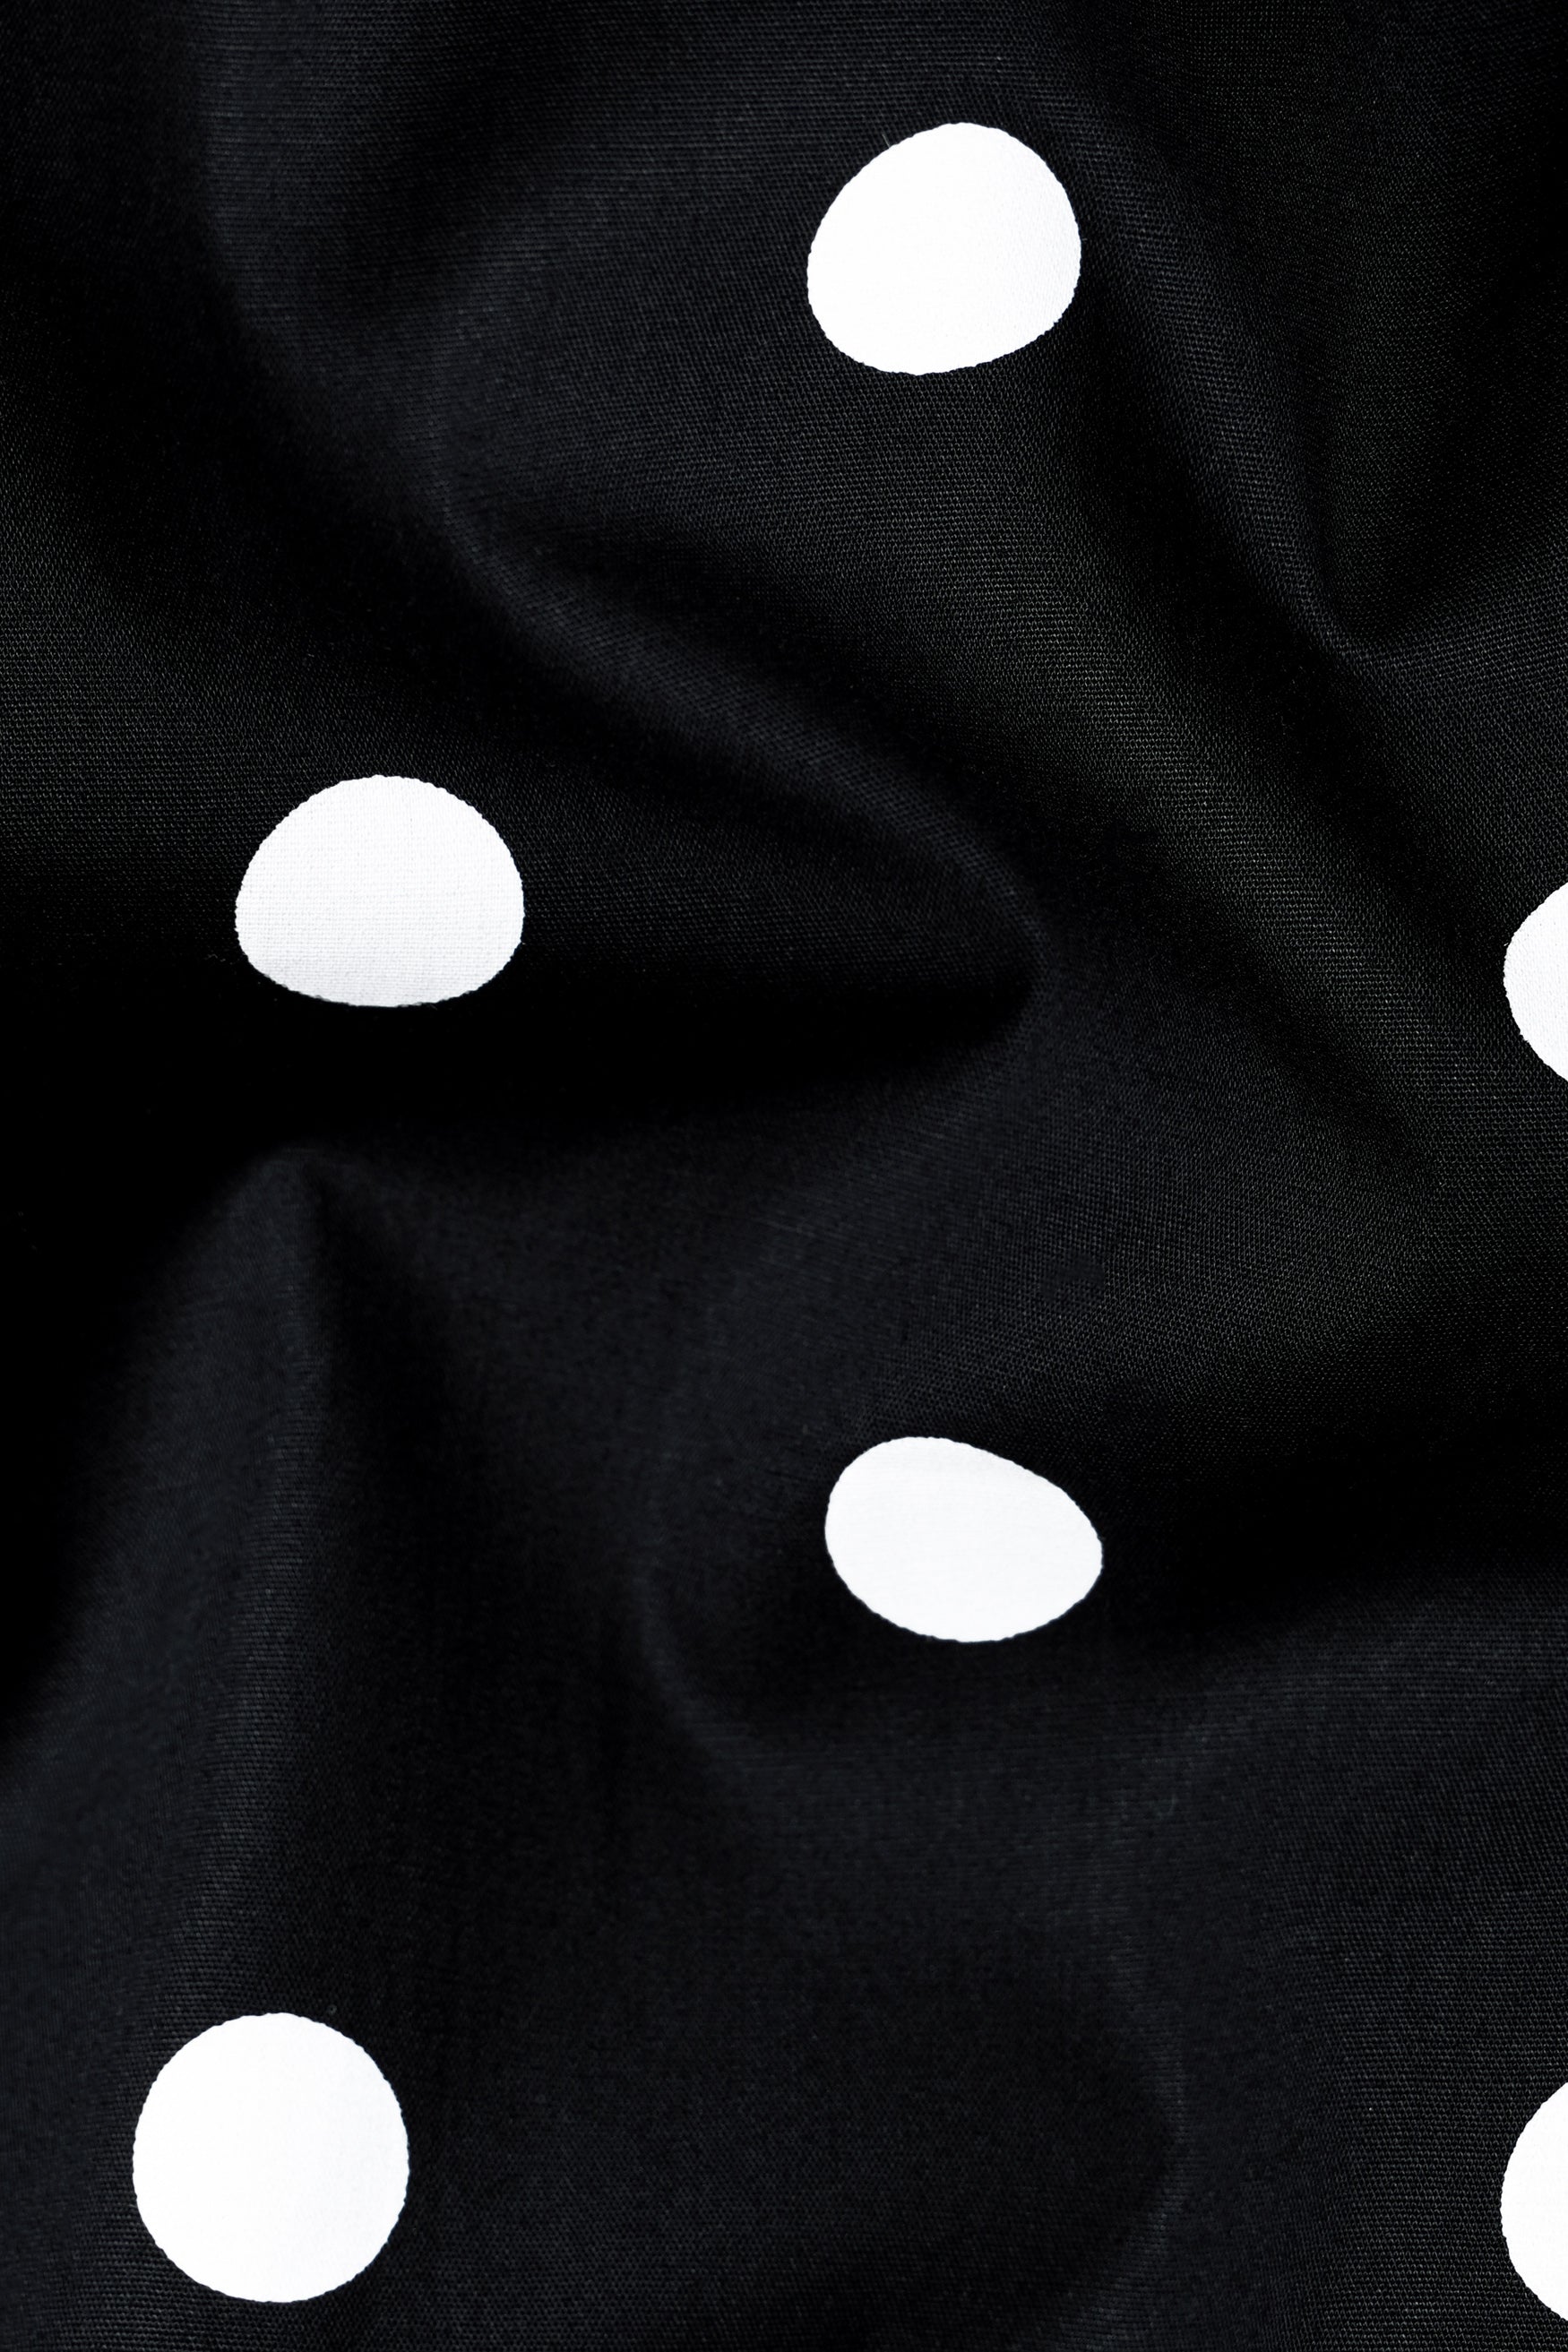 Jade Black and Bright White Polka Dotted With White Piping Work Premium Cotton Women’s Designer Blazer